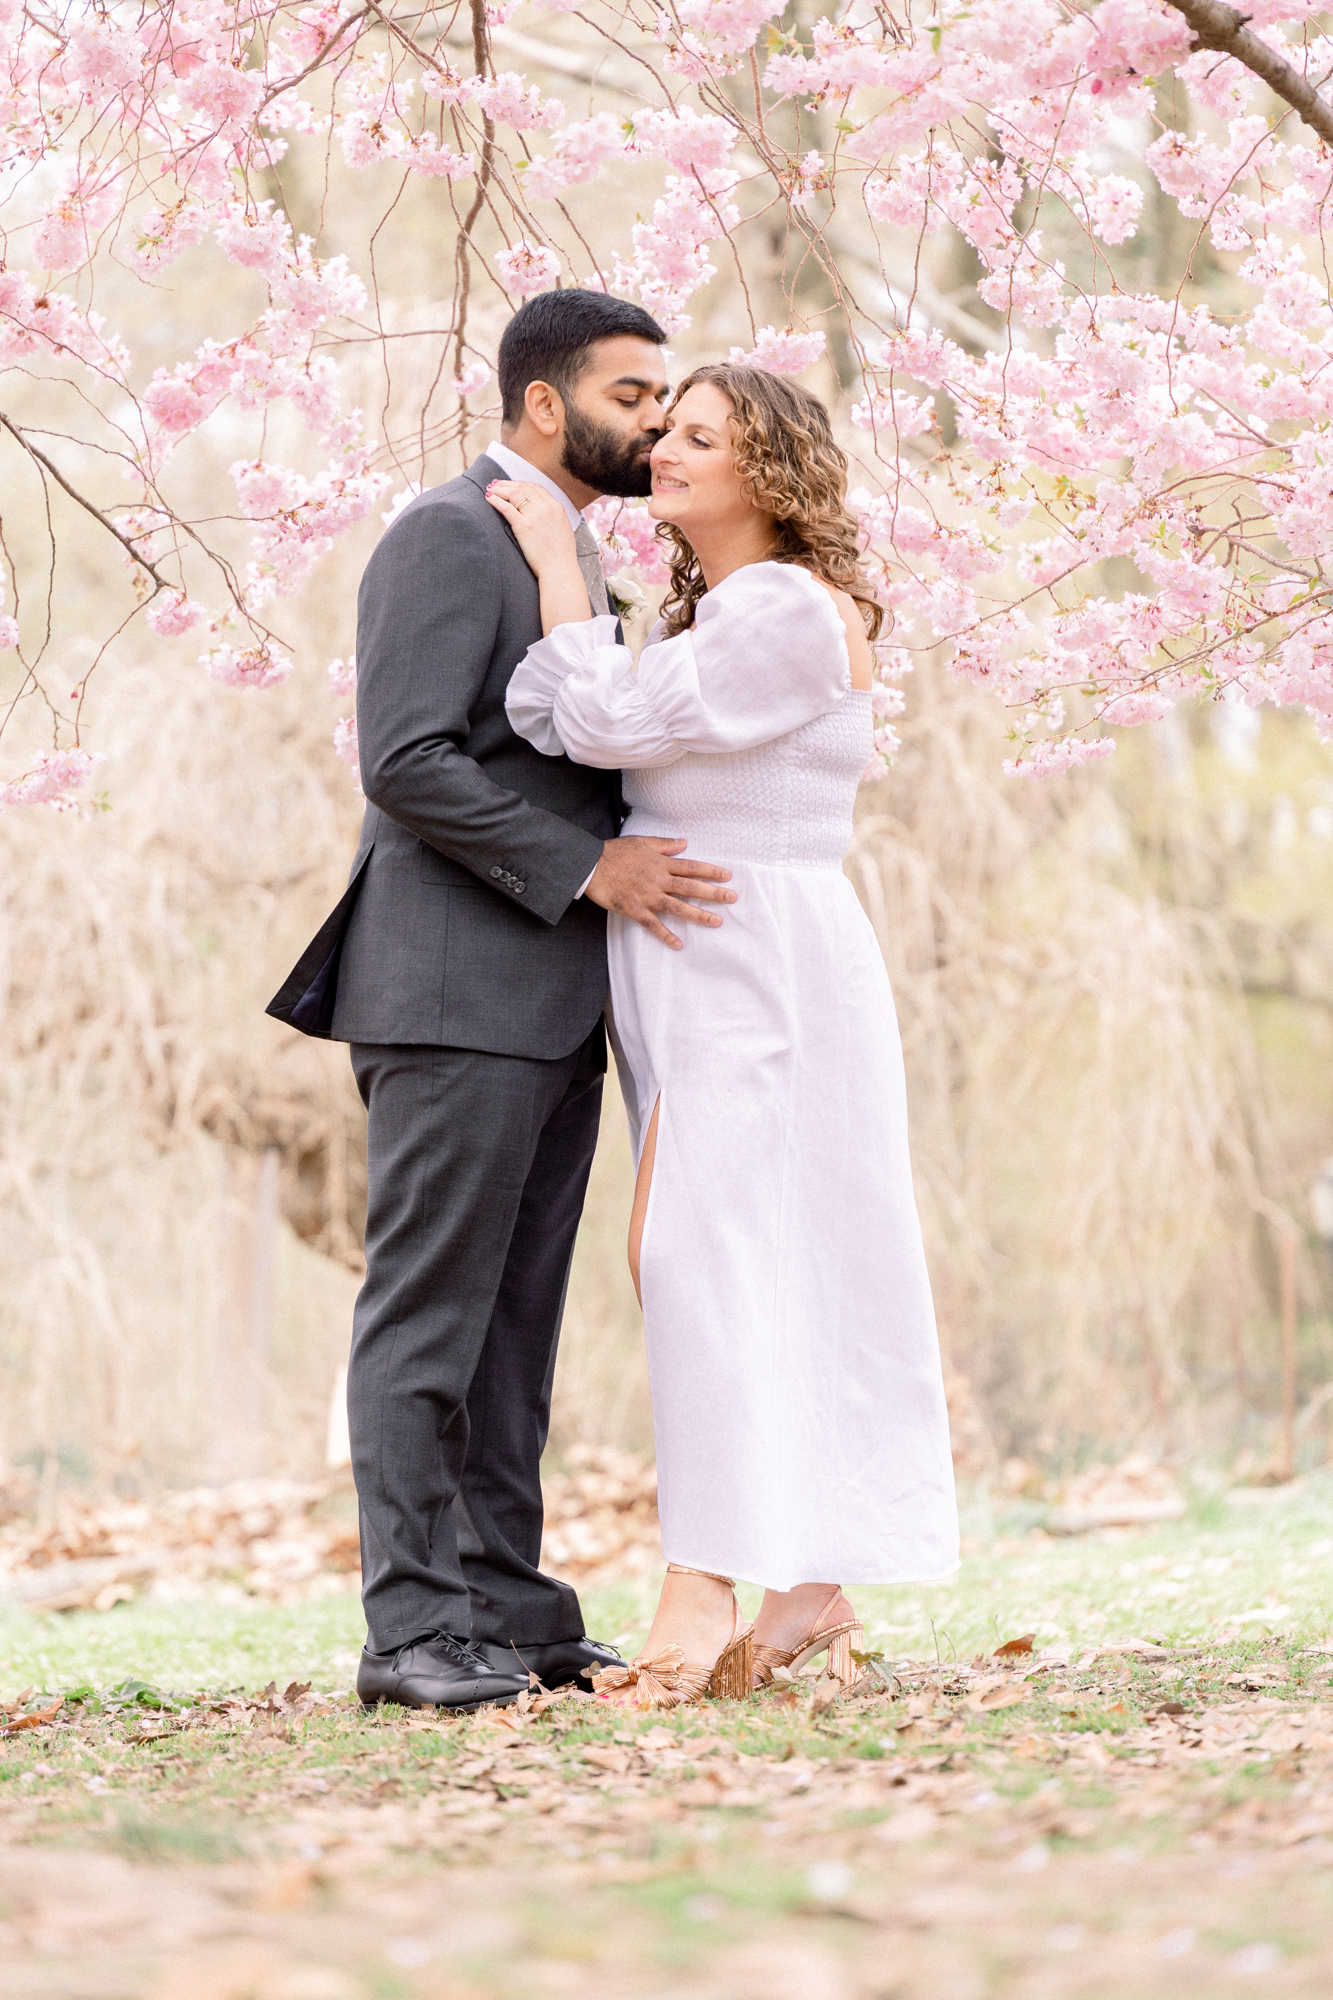 Colorful Prospect Park Wedding Photos with Springtime Cherry Blossoms